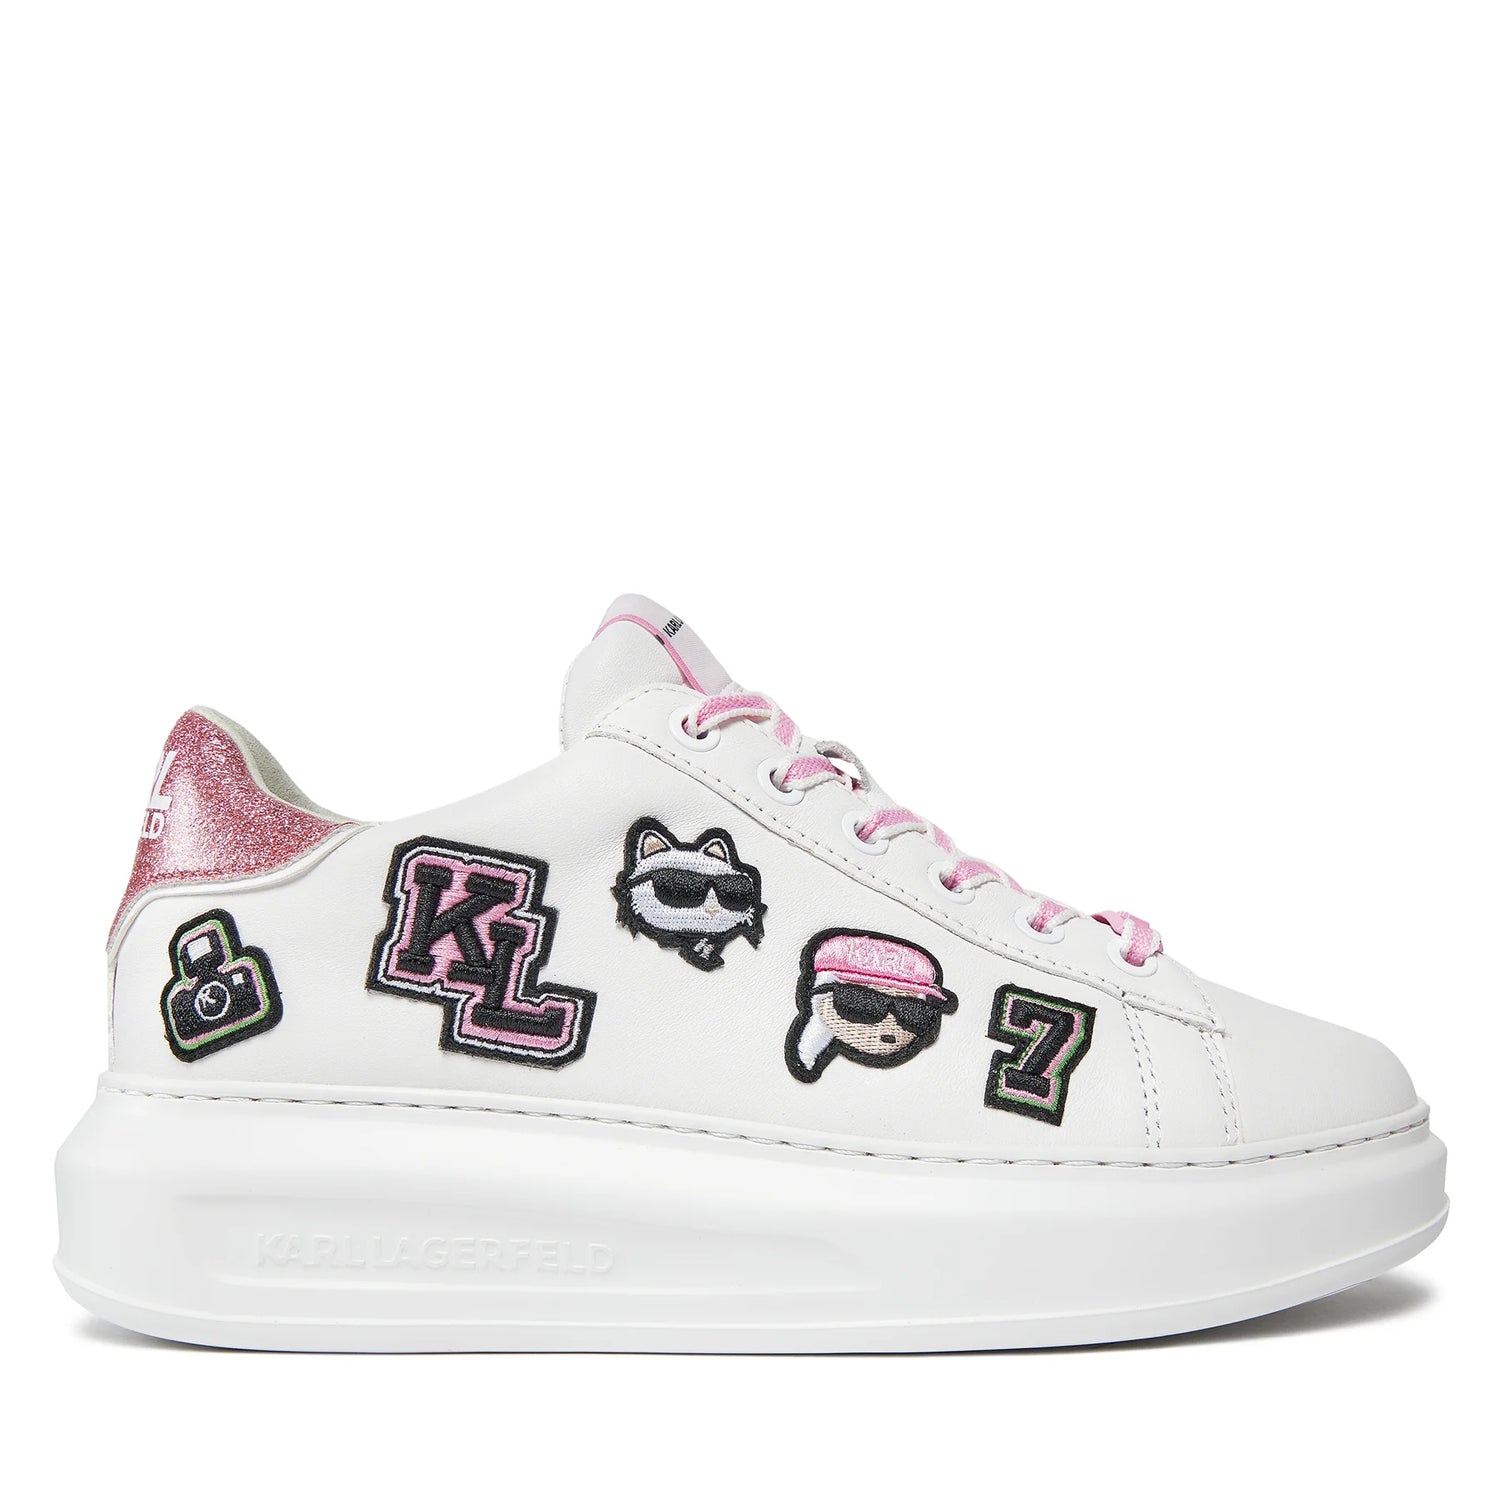 Karl Lagerfeld Sapatilhas Sneakers Shoes Kl62574 Whi Pink Branco Rosa_shot1